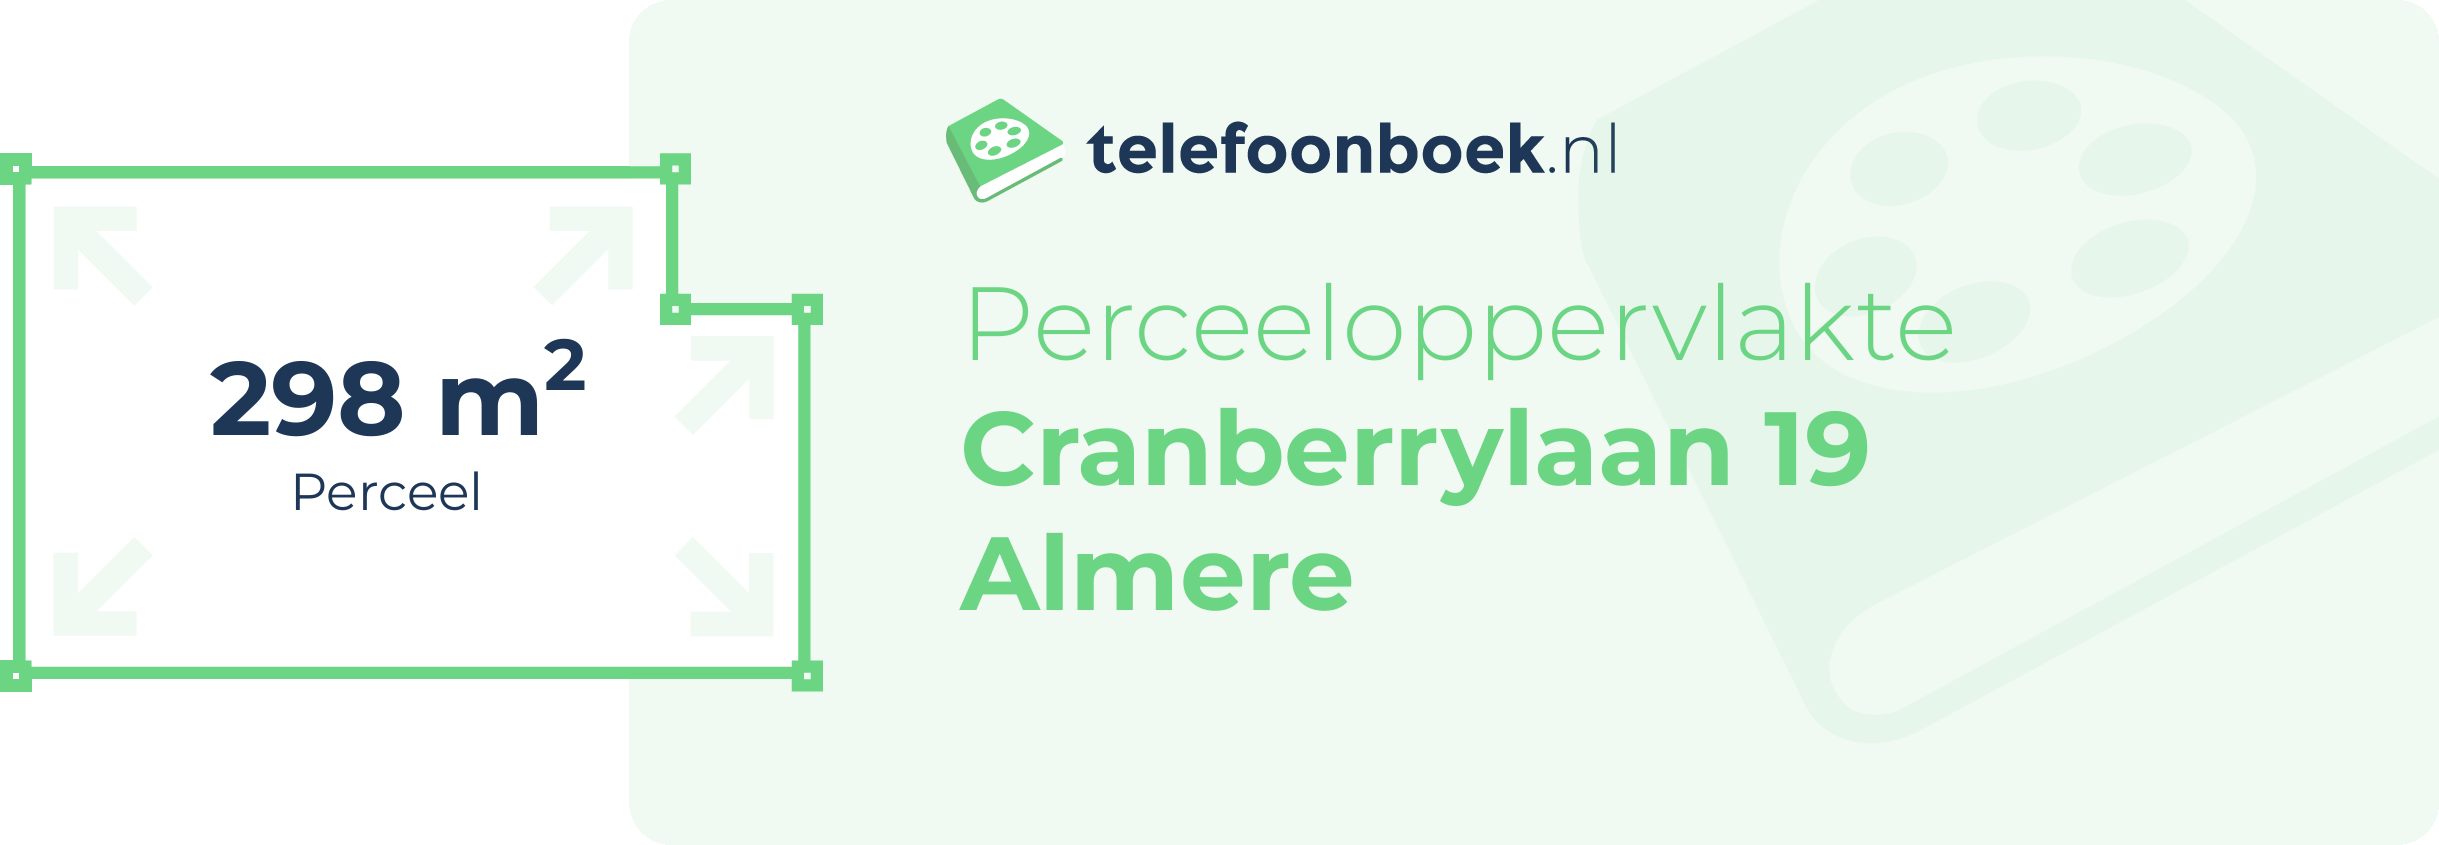 Perceeloppervlakte Cranberrylaan 19 Almere